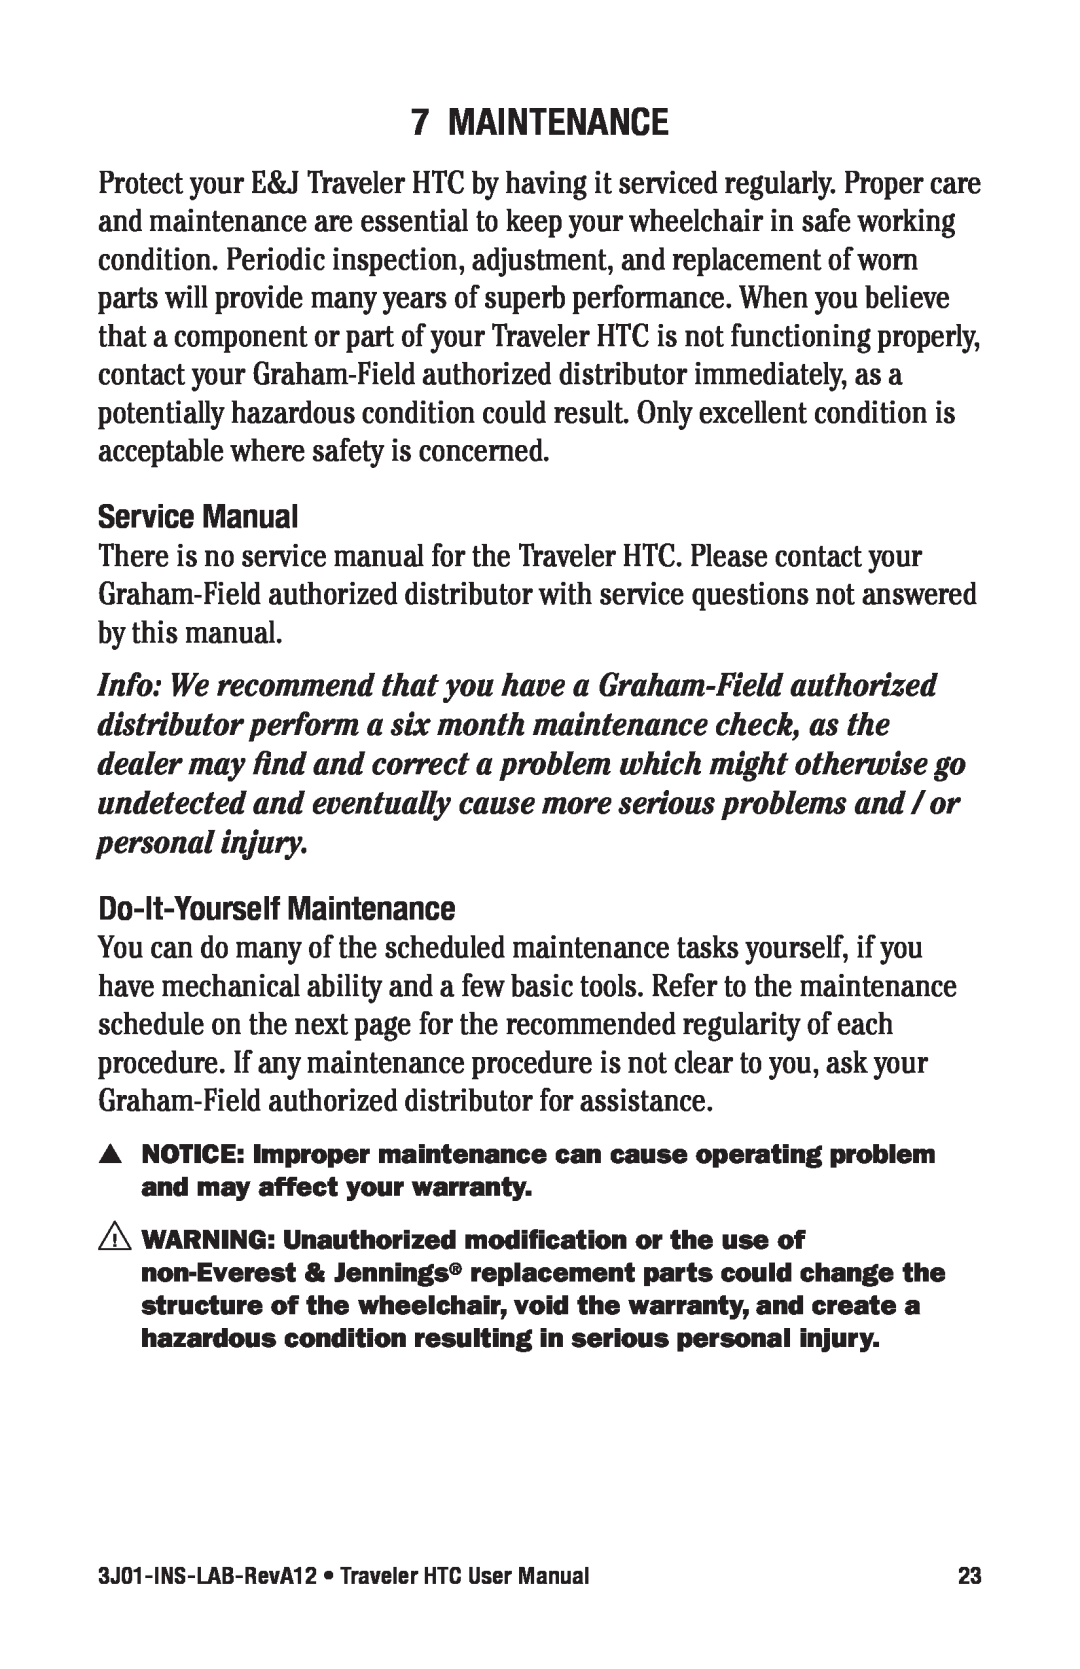 E&J Traveler HTC manual MAINTeNANCe, Service Manual, do-It-yourself Maintenance 